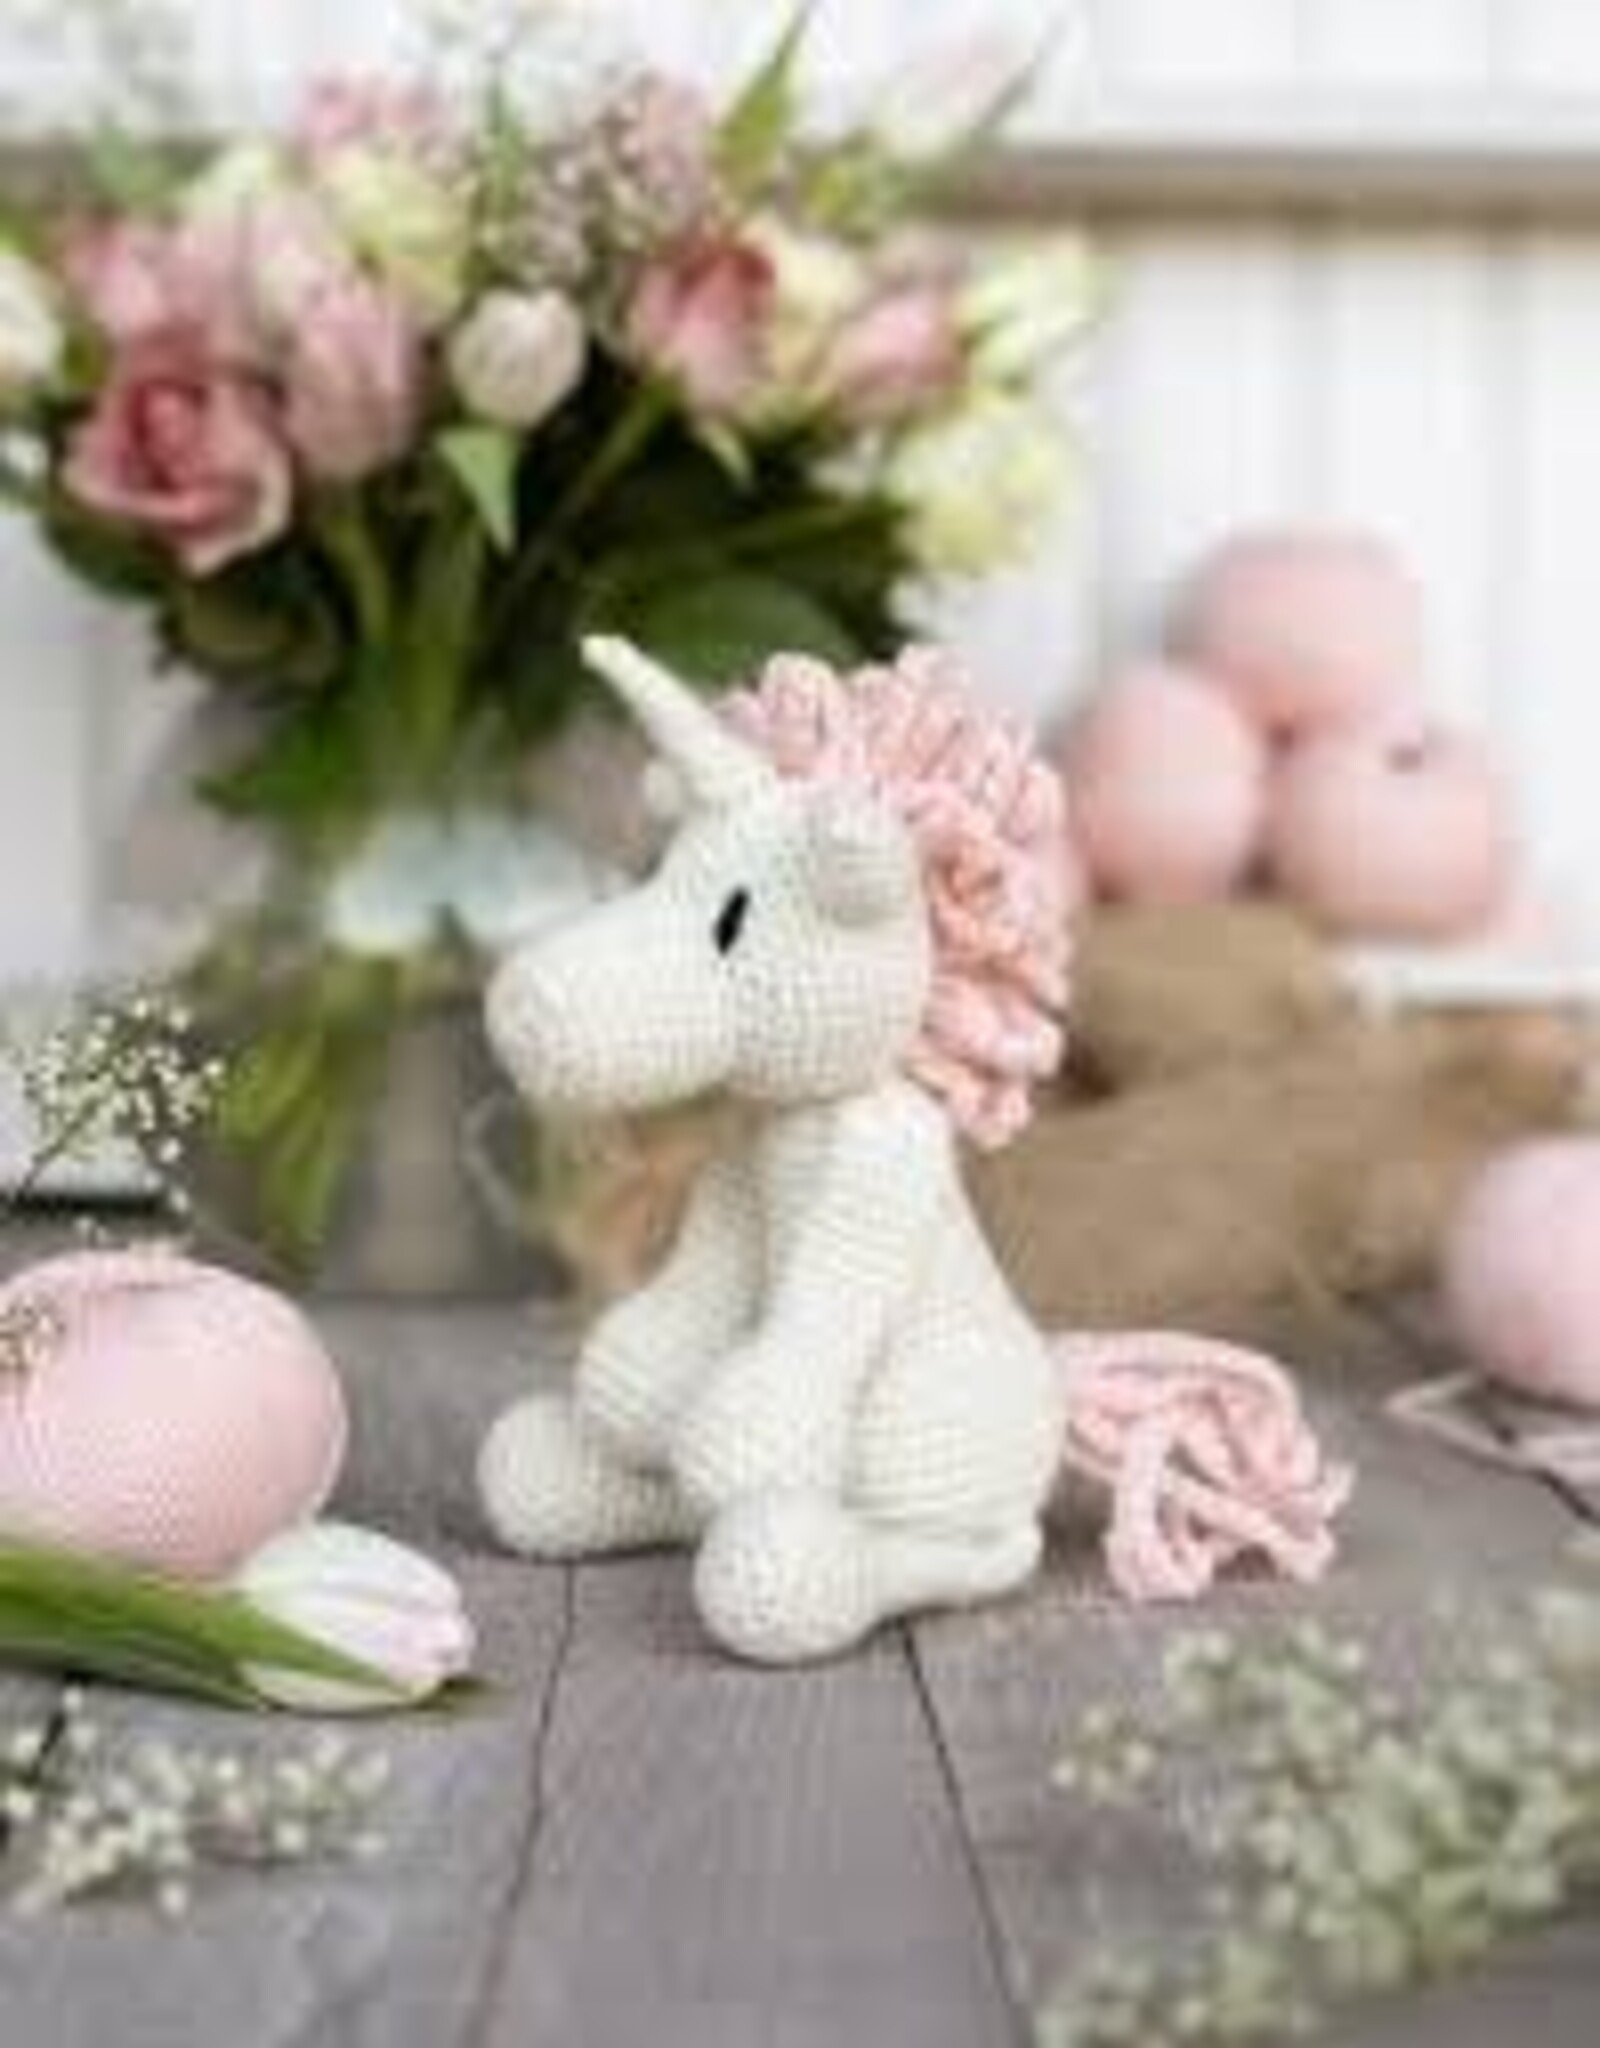 Crocheting kit Unicorn